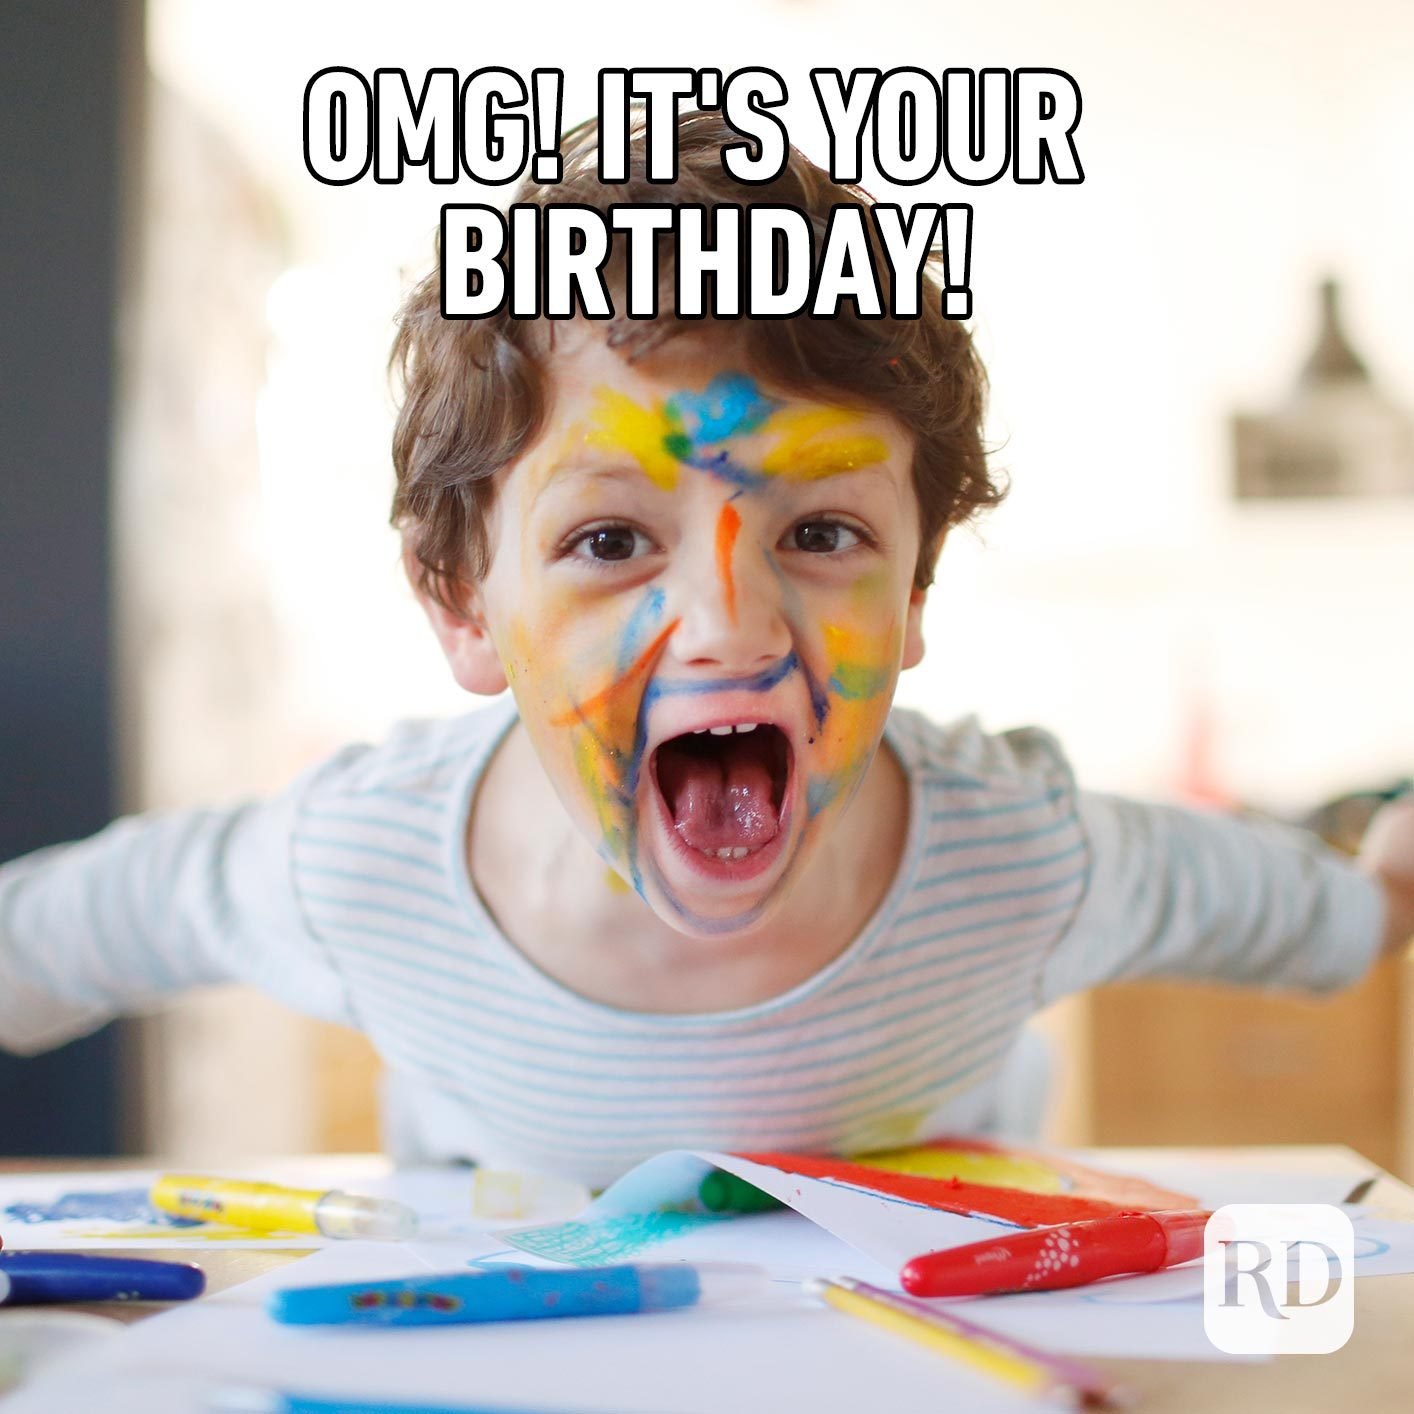 These happy birthday memes do the trick! rd.com - Morgan Cutolo. 